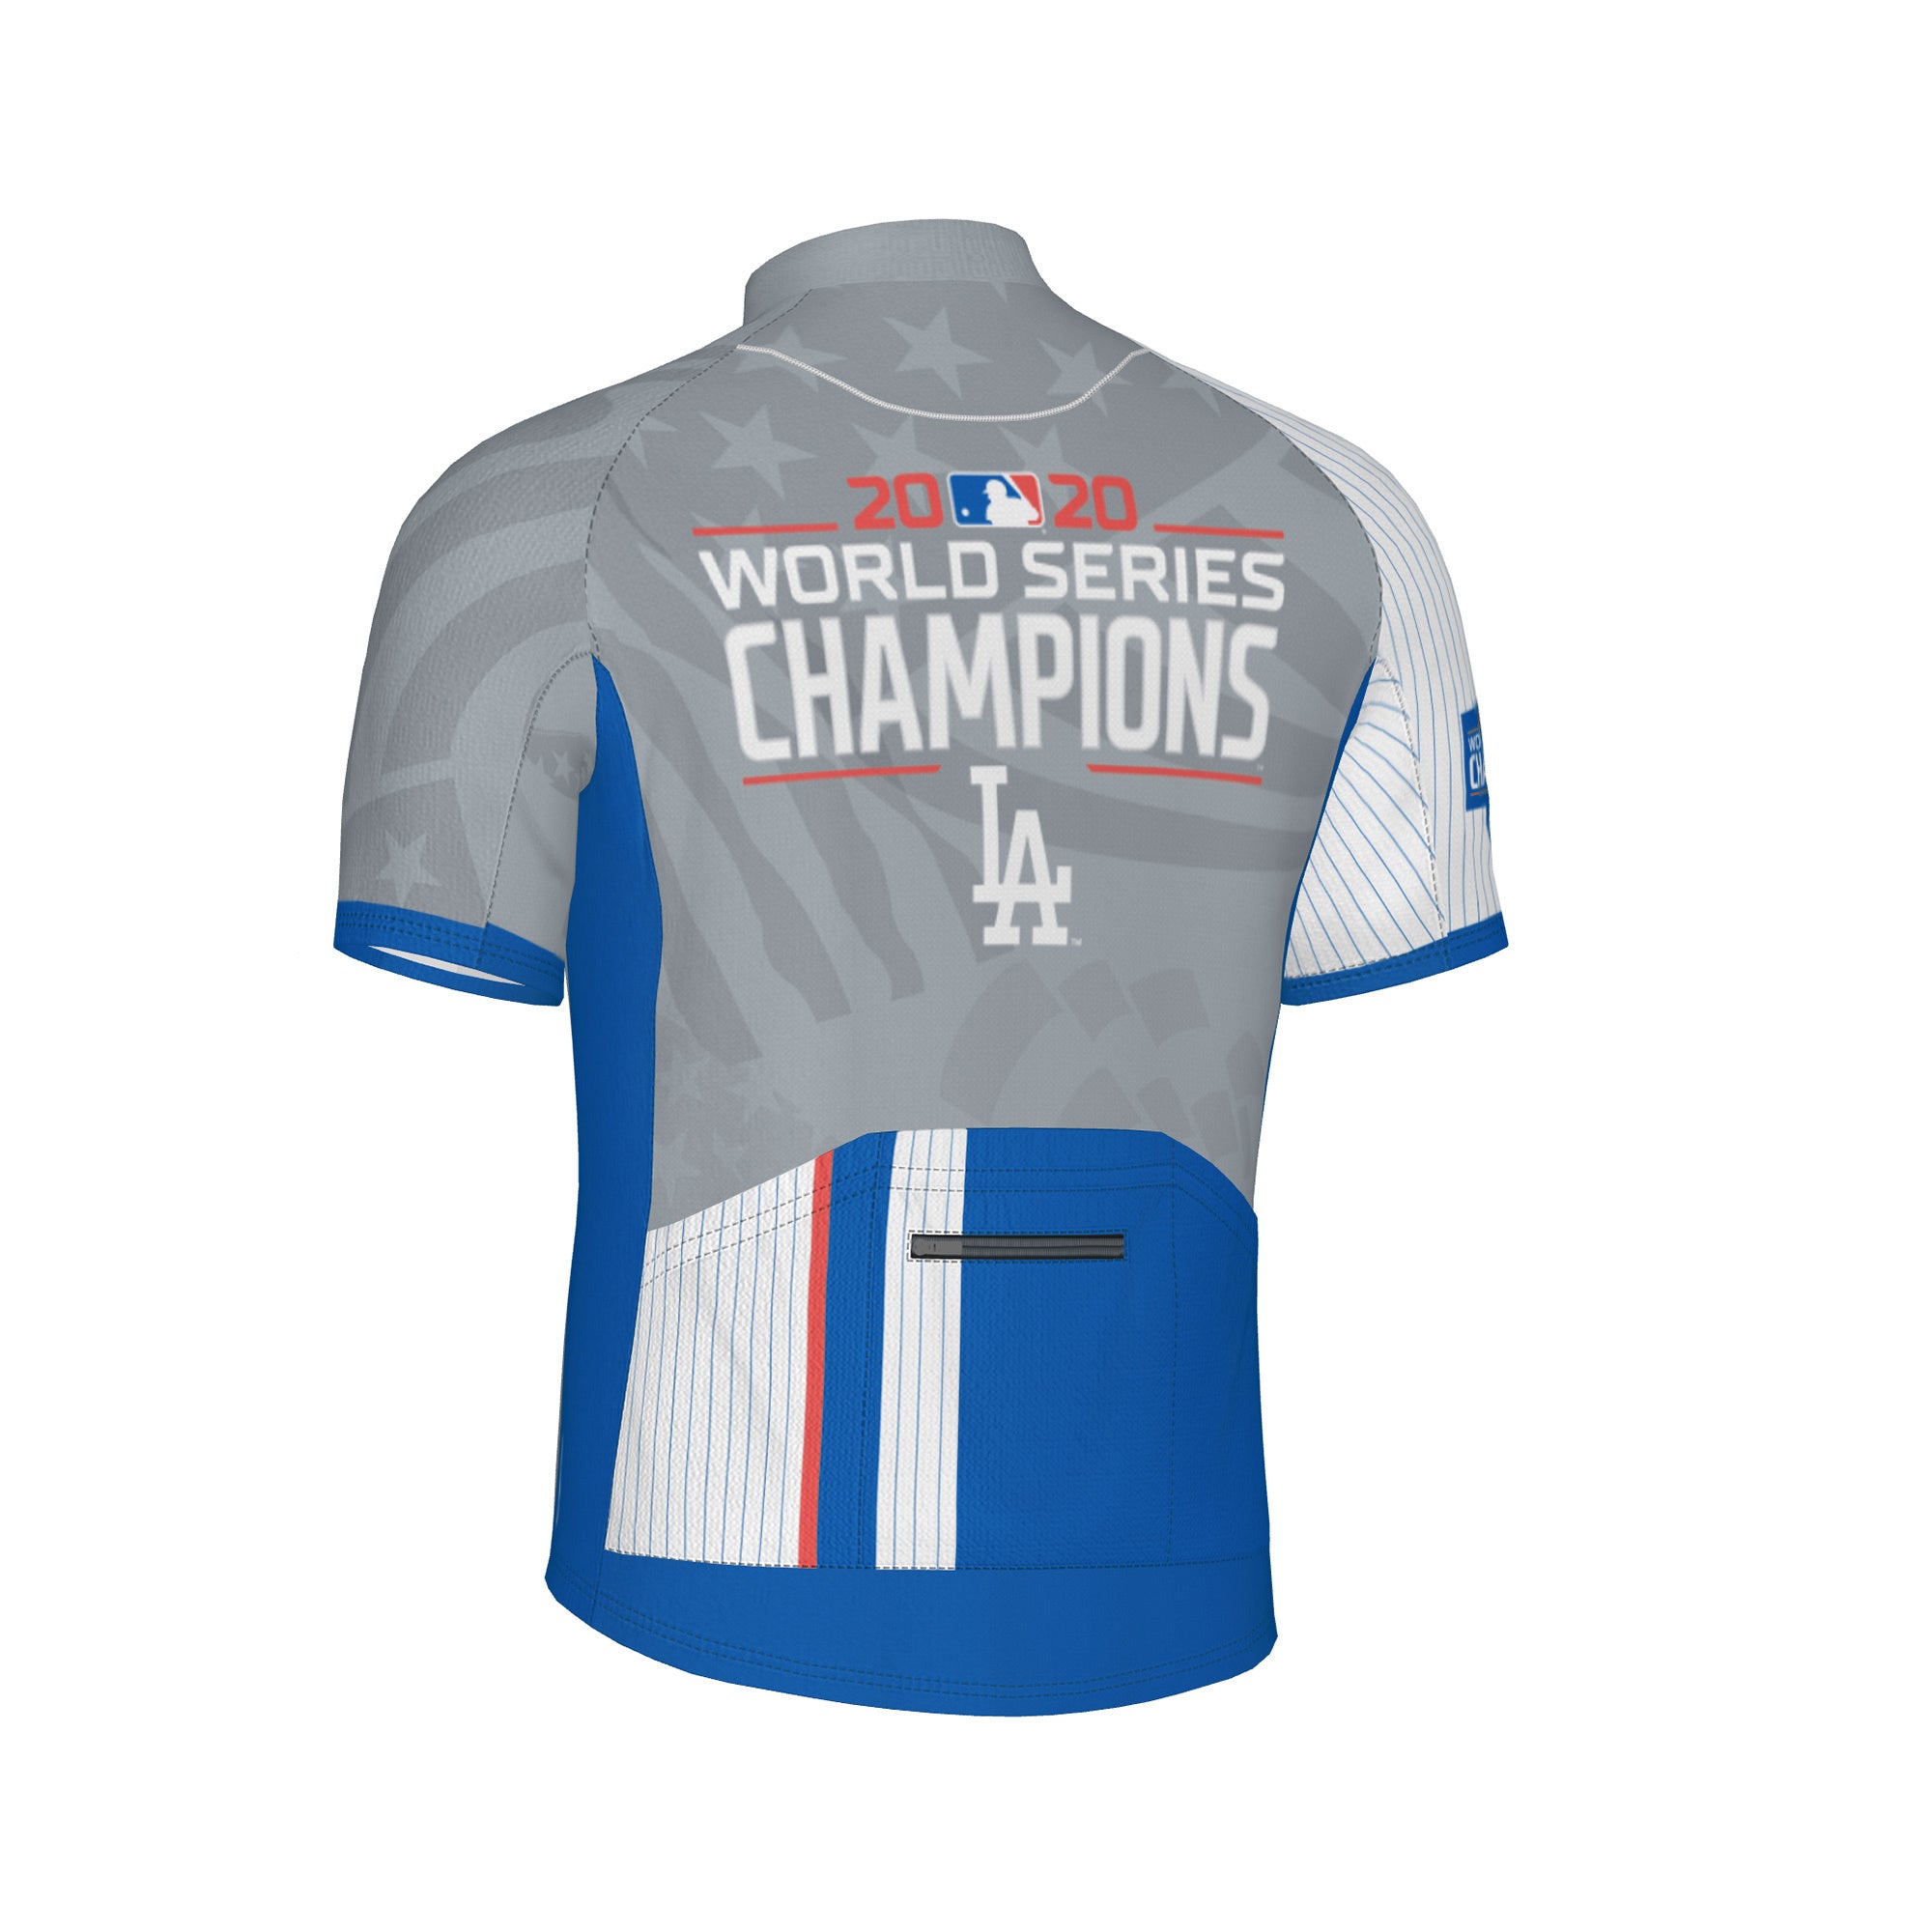 Los Angeles Dodgers MLB World Series gear, shirts - Sports Illustrated